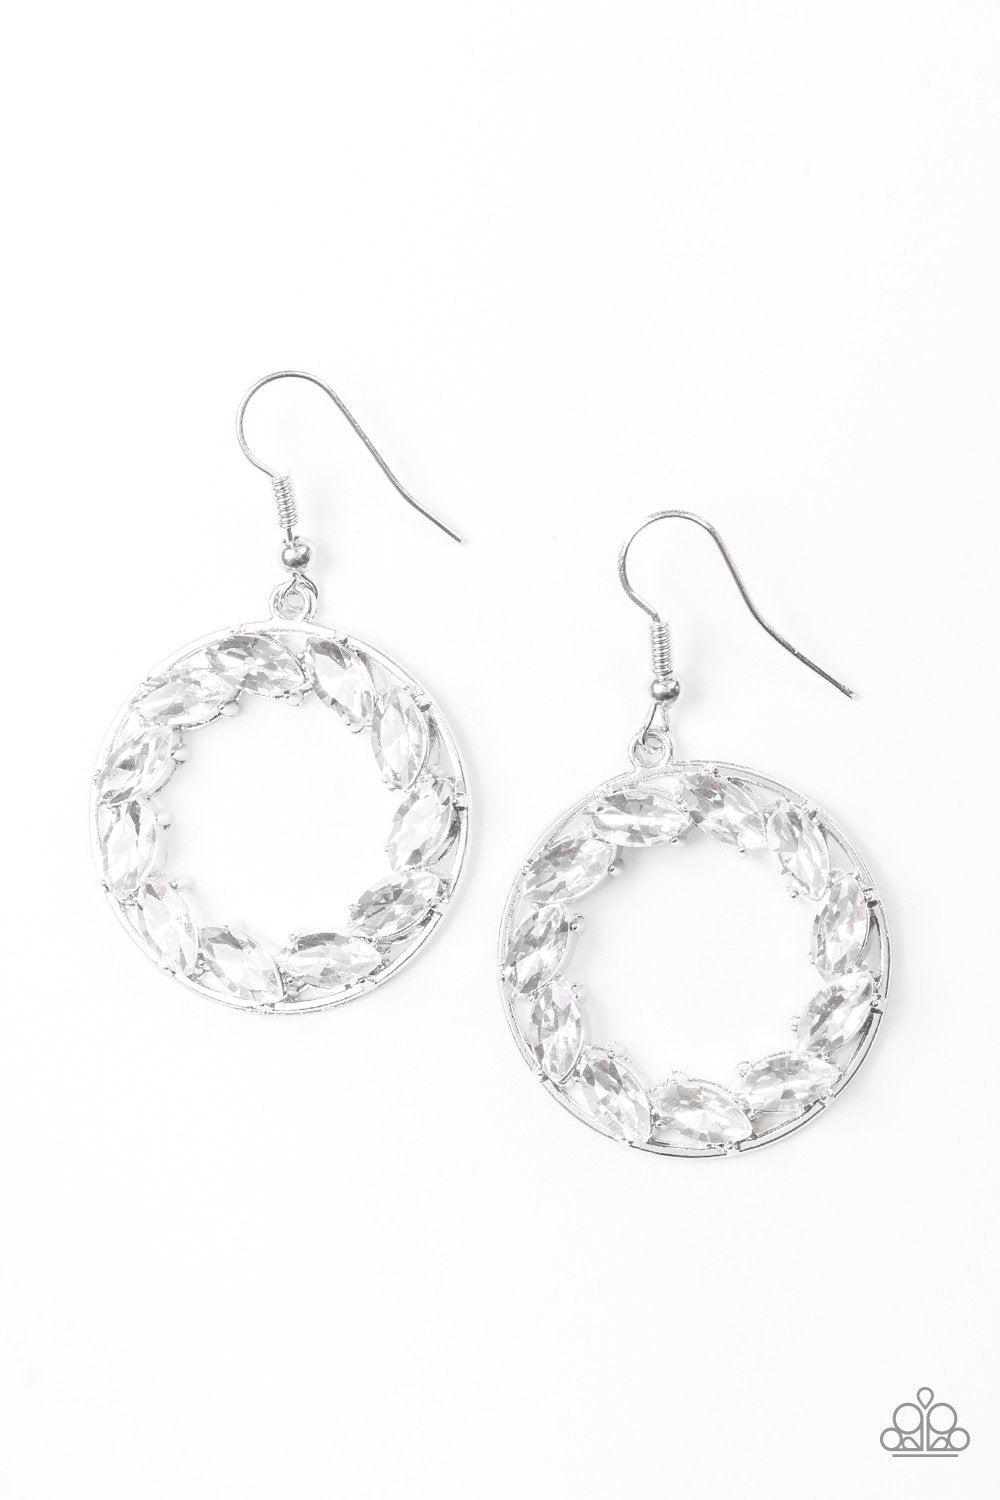 Global Glow White Rhinestone Earrings - Paparazzi Accessories-CarasShop.com - $5 Jewelry by Cara Jewels